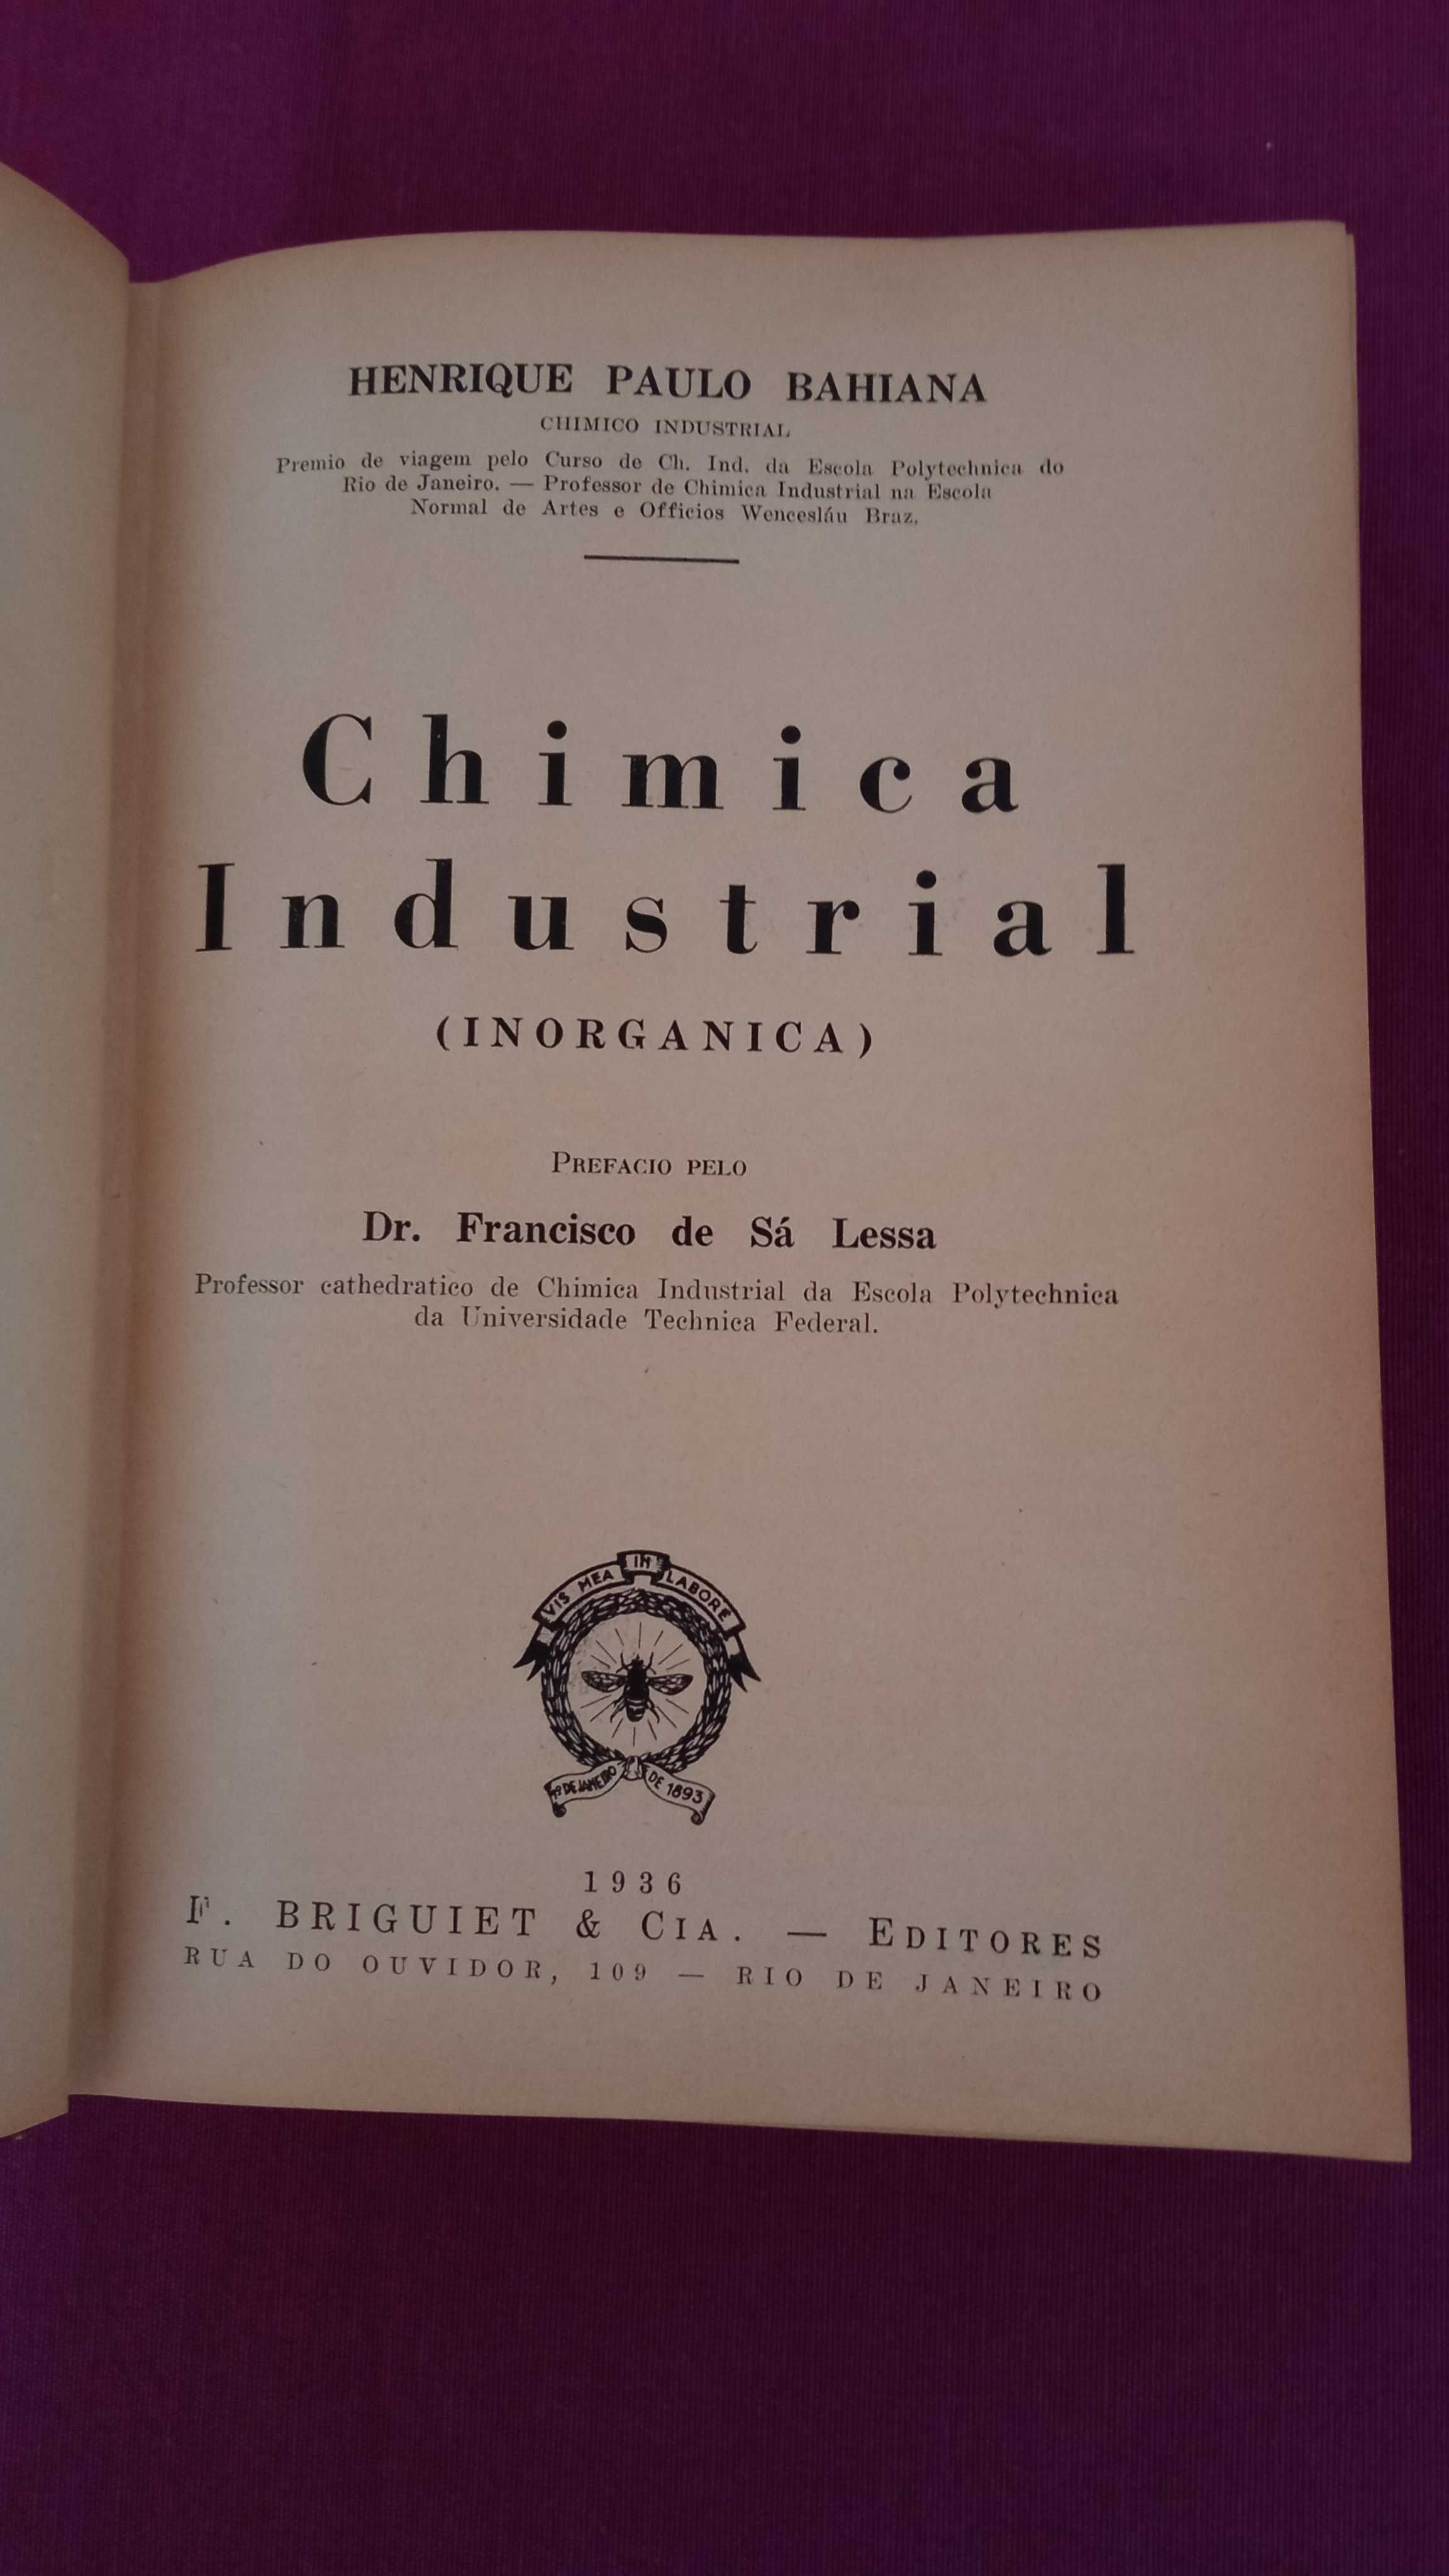 Chimica Industrial (Inorgânica), de Henrique Paulo Bahiana